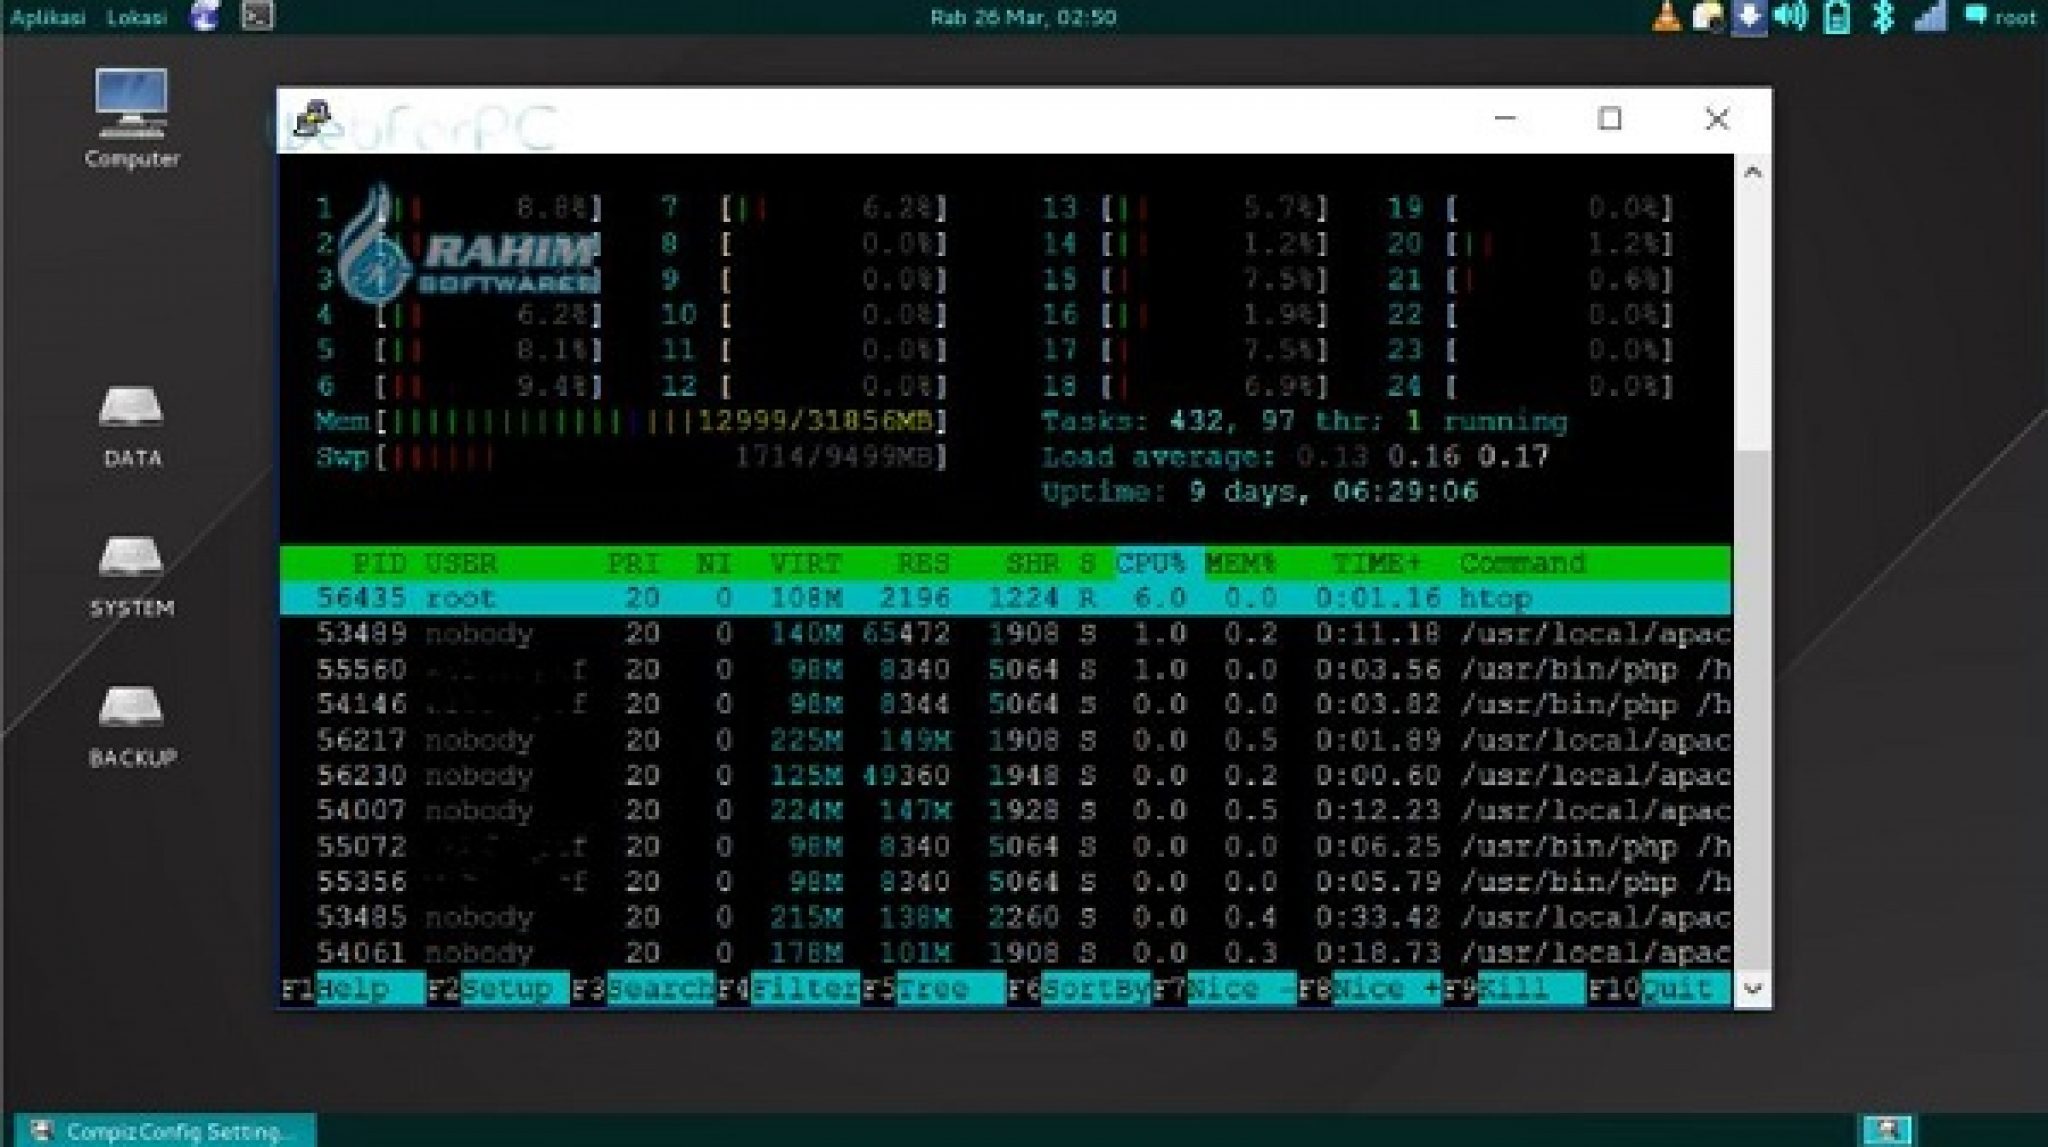 install wireshark on kali linux